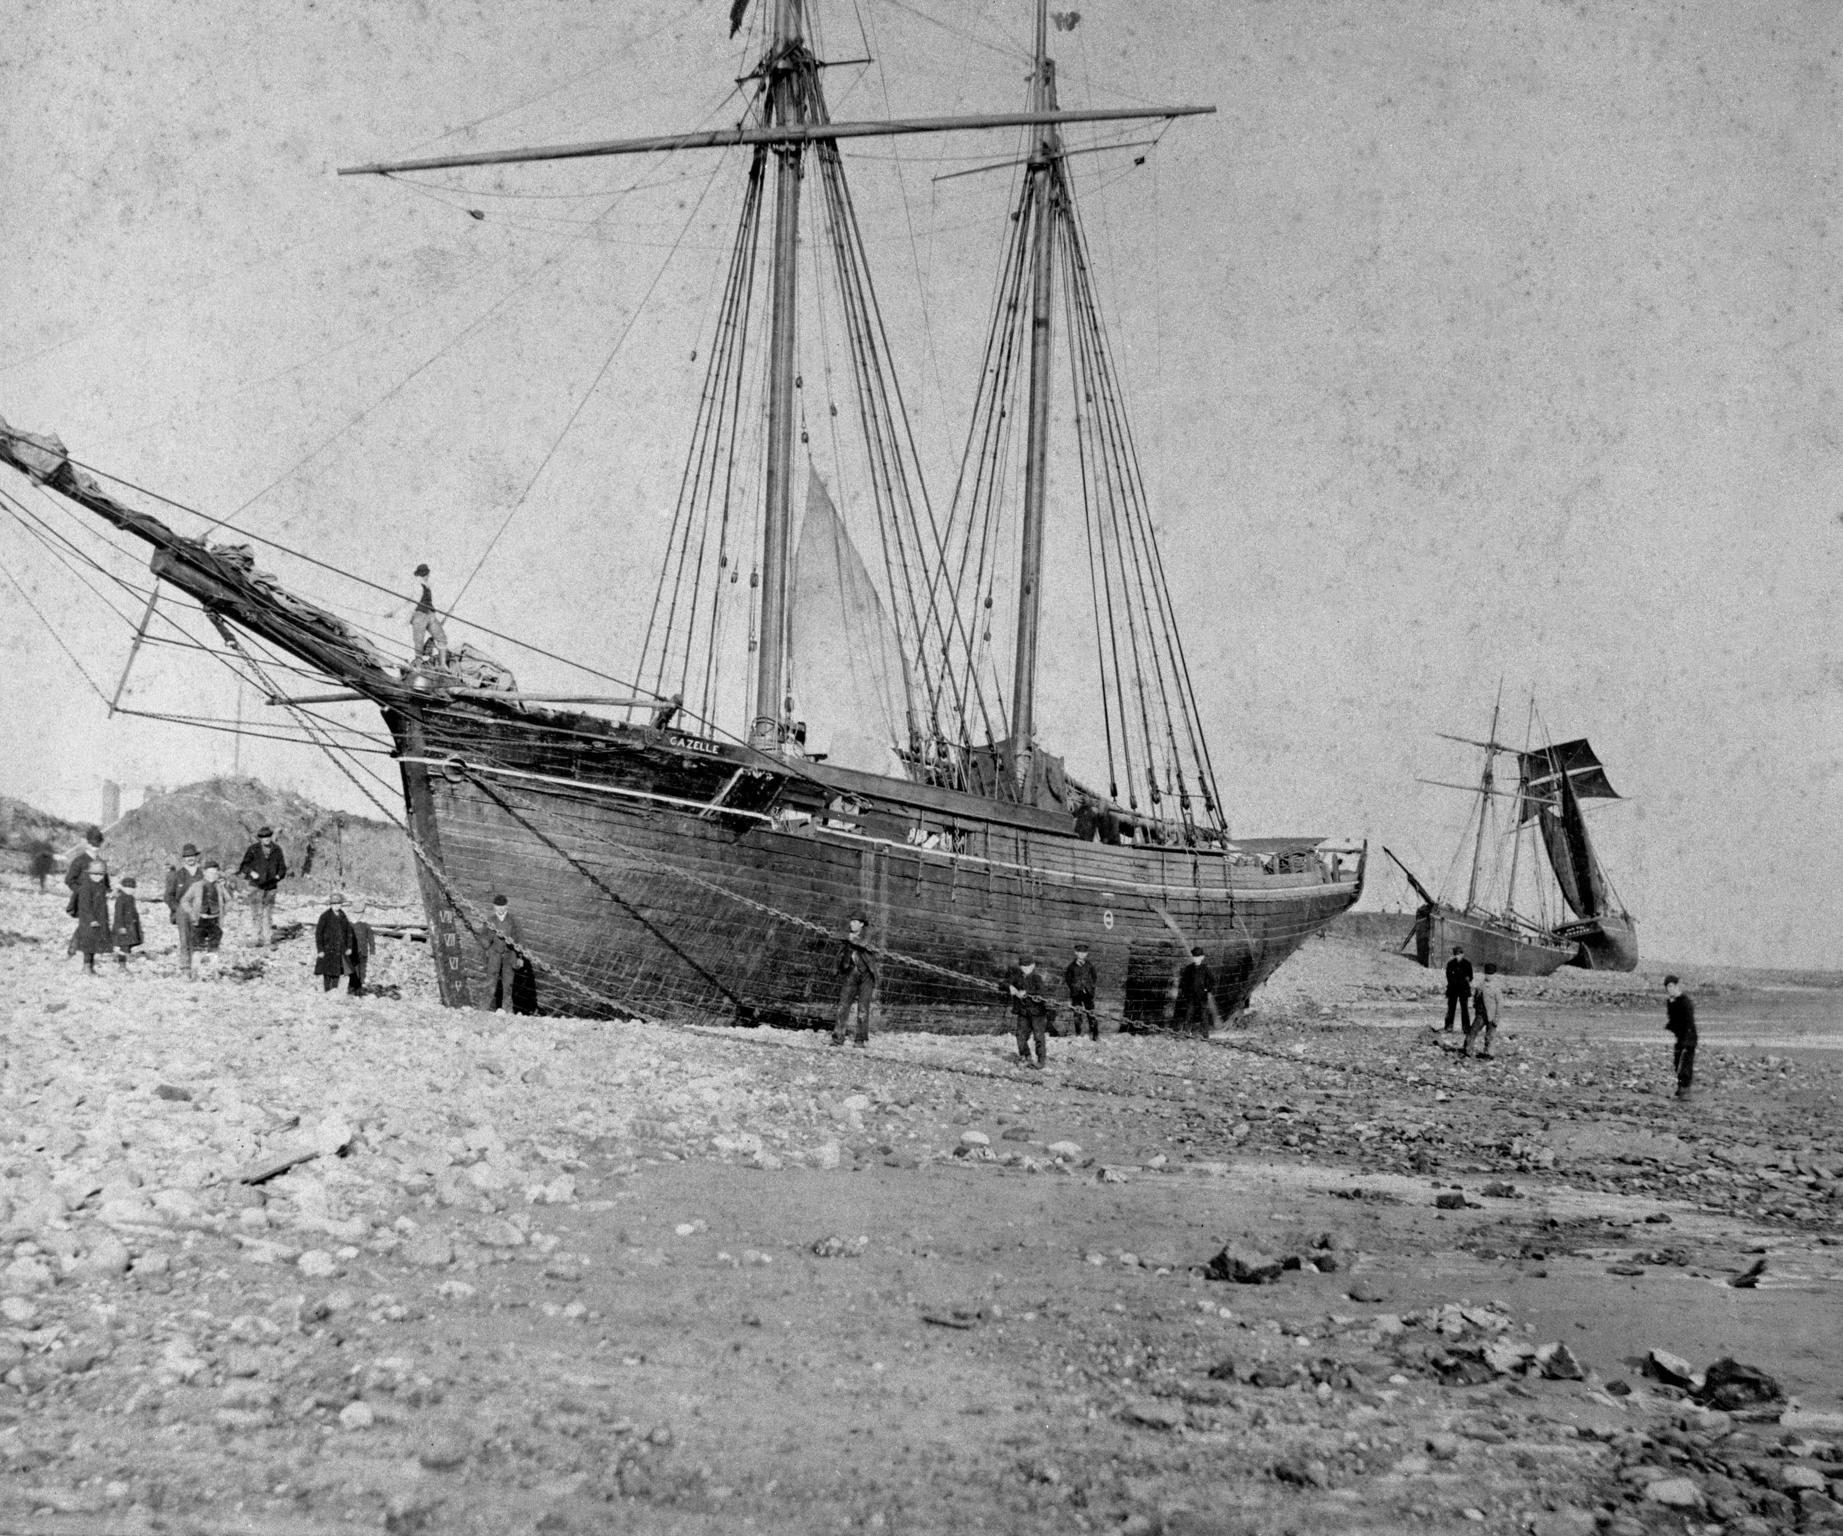 GAZELLE blown ashore 1882, photograph